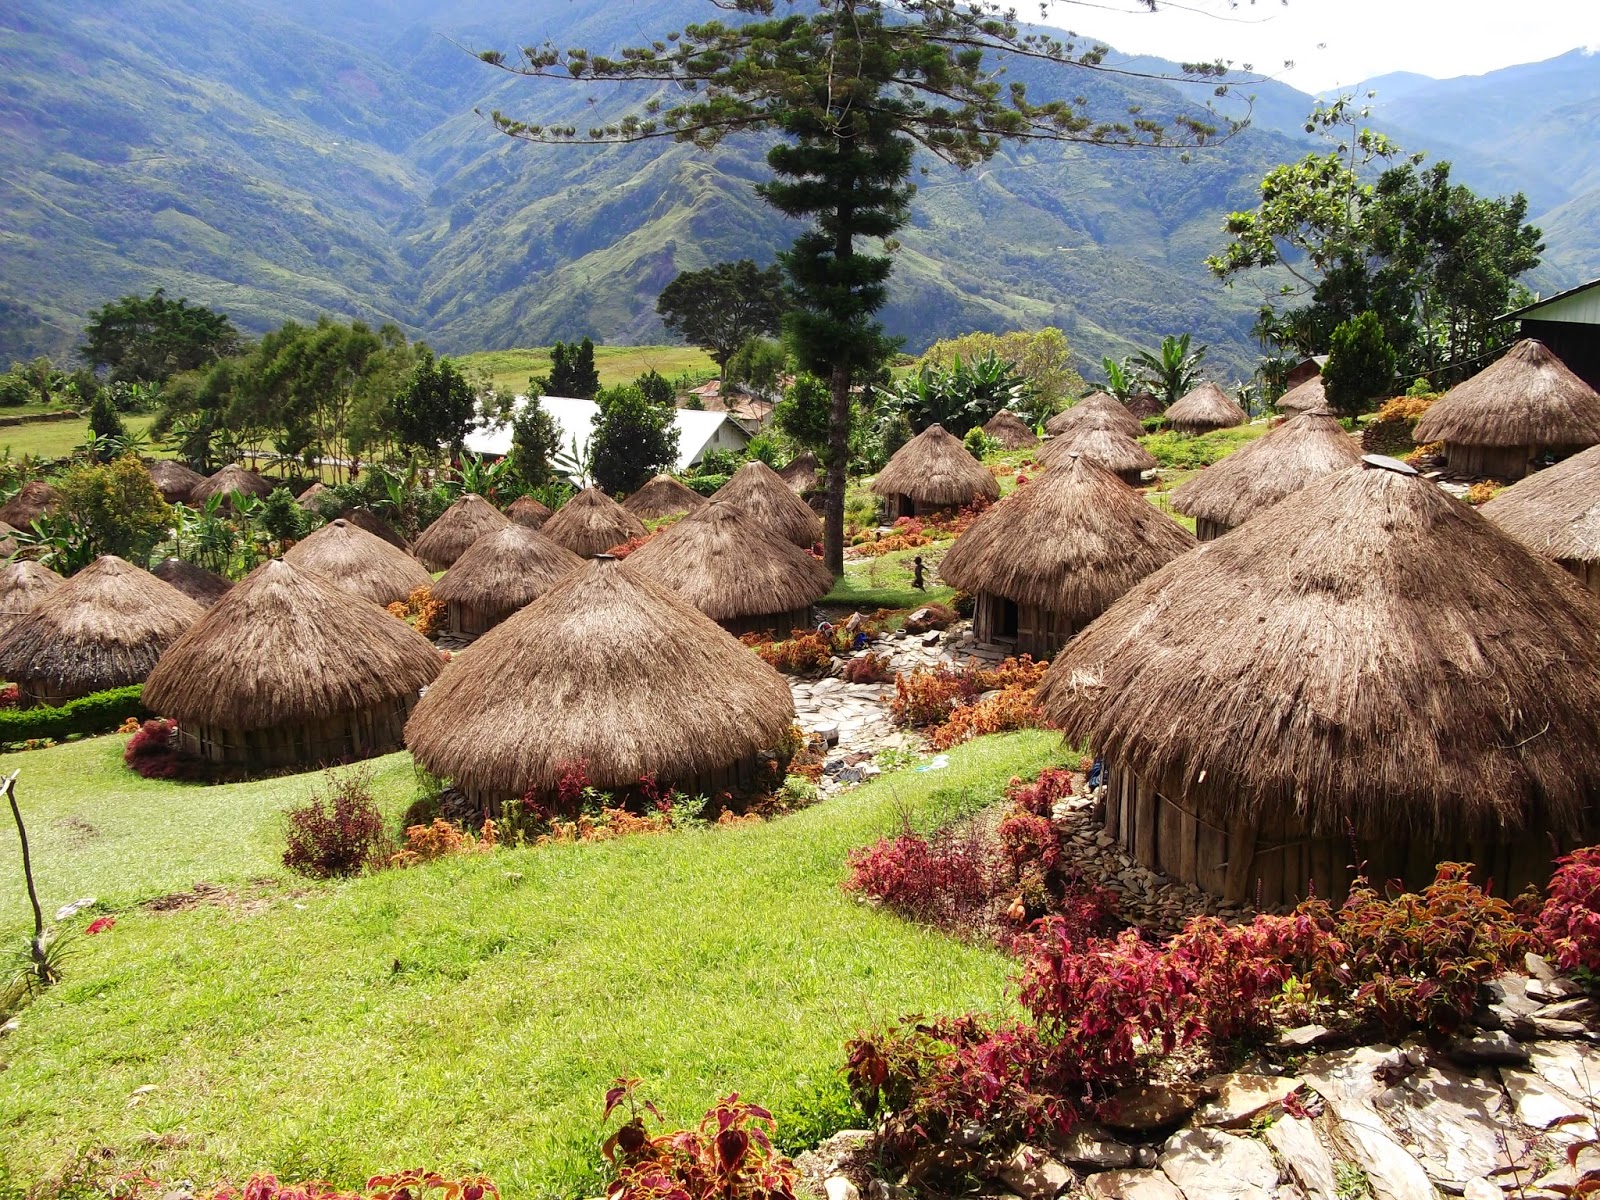 The beauty of Mamit, Papua